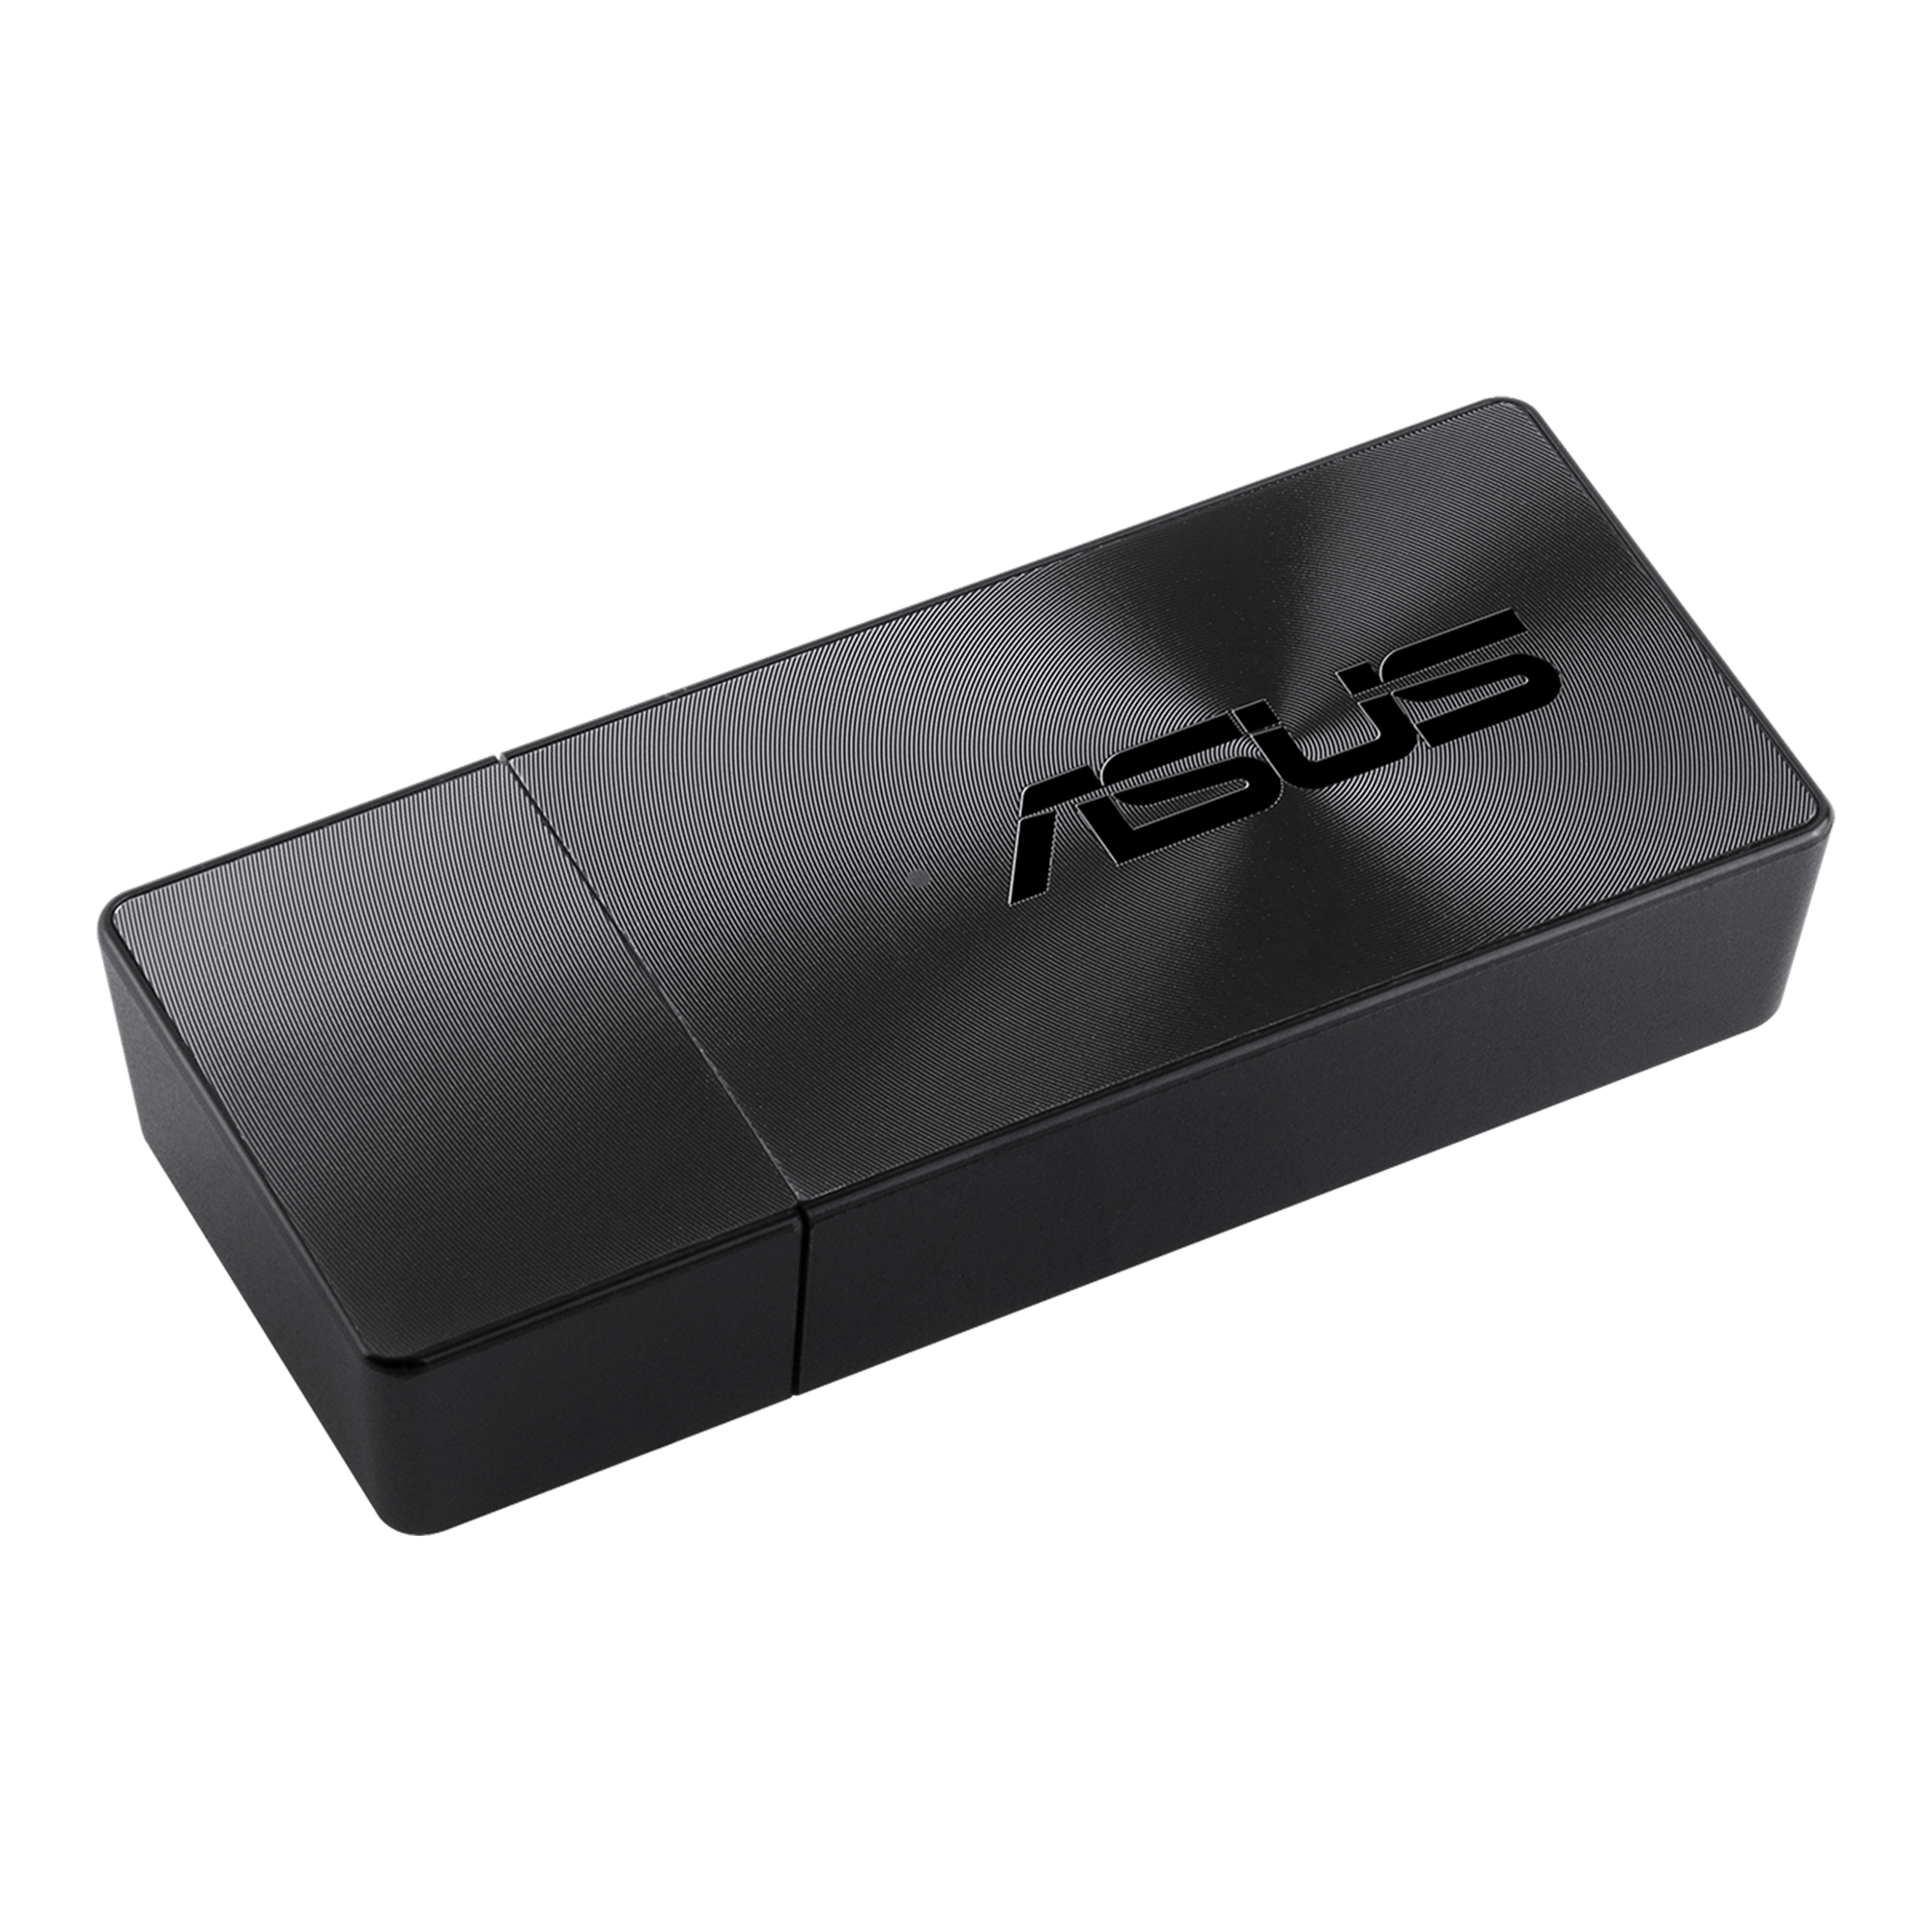 ASUS USB-AC55 B1 Deepin Driver Installation - Featured